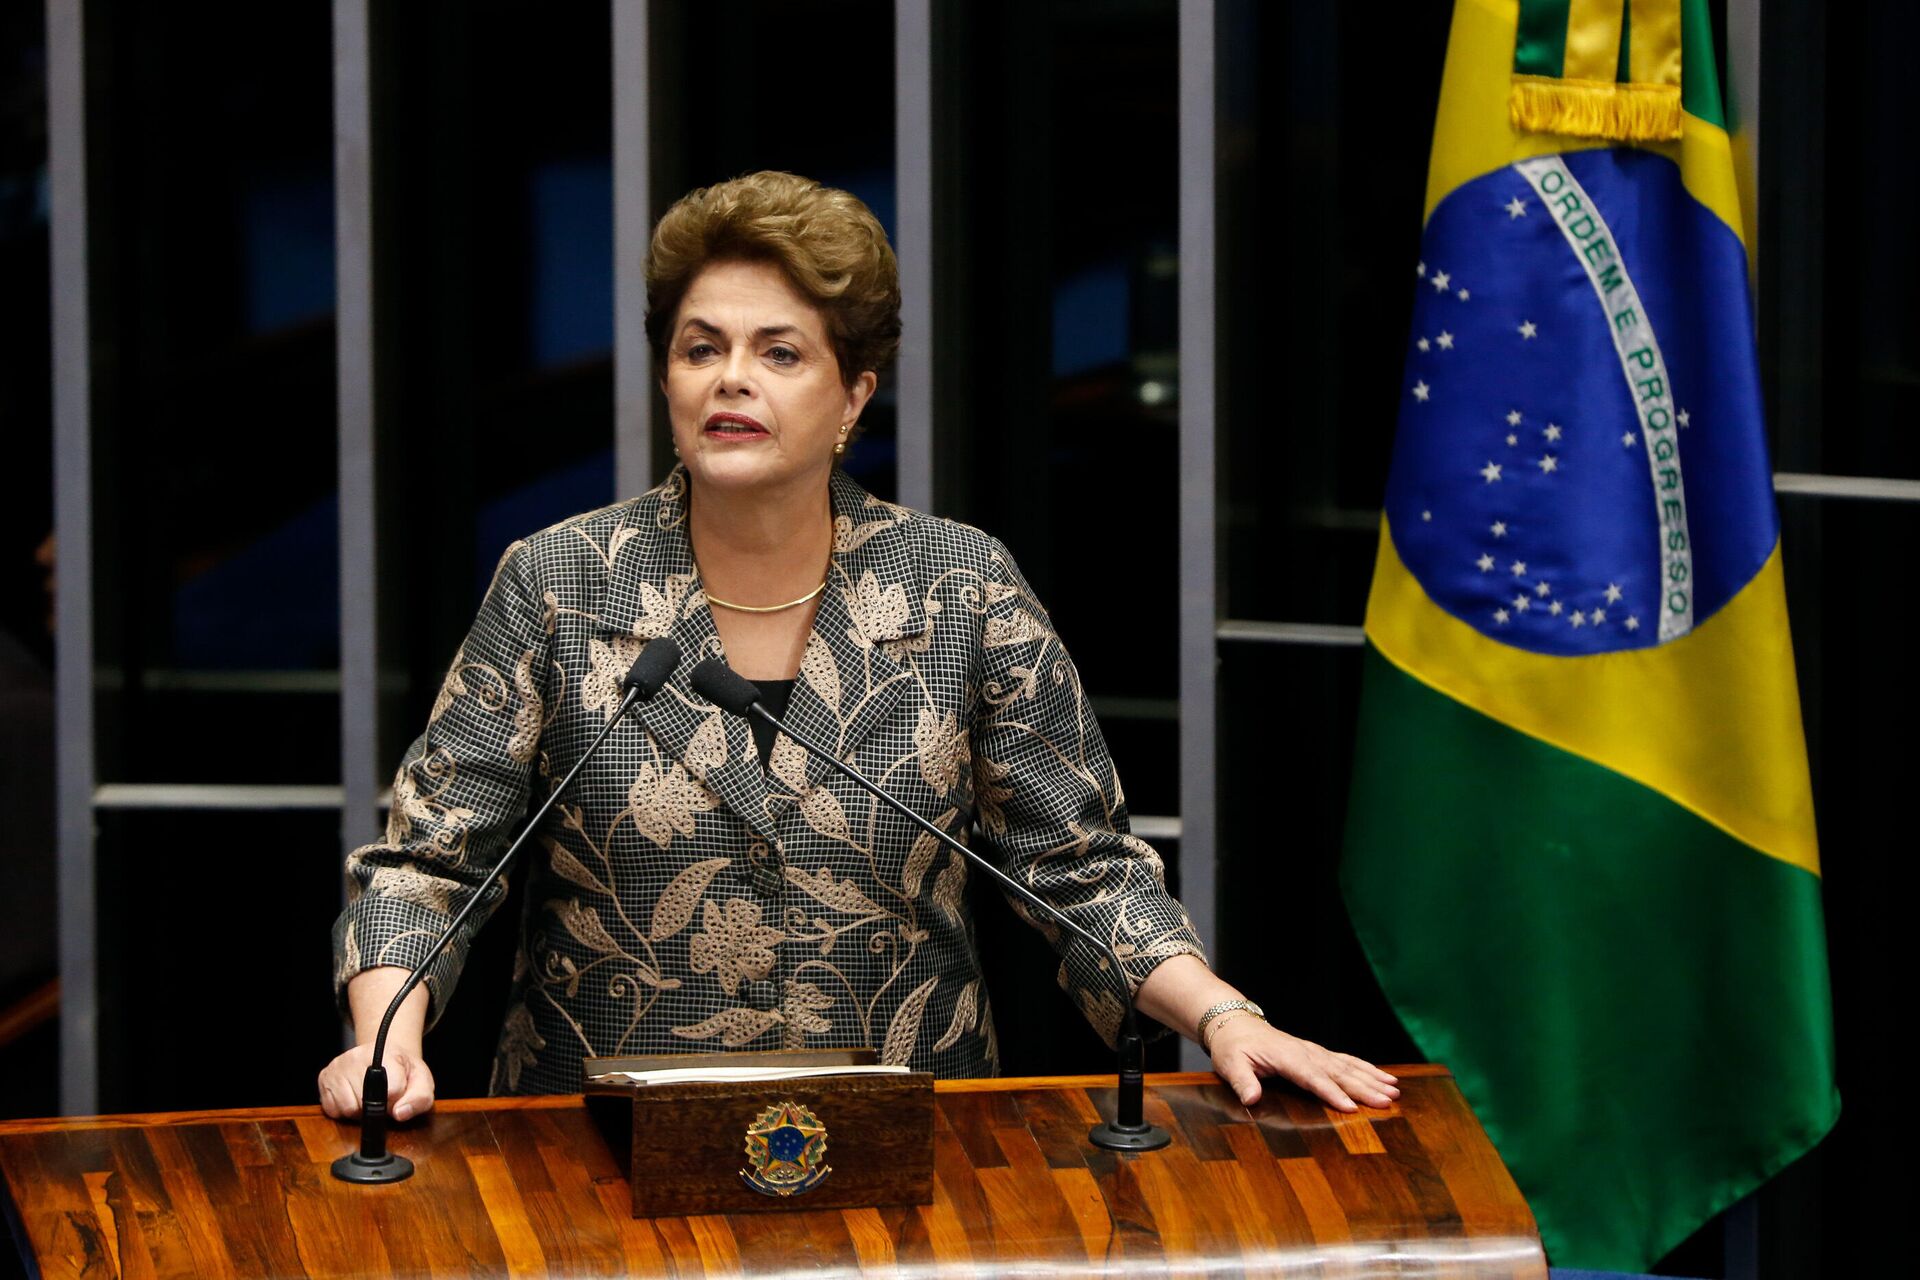 A ex-presidente Dilma Rousseff discursa na Câmara dos Deputados - Sputnik Brasil, 1920, 30.10.2022